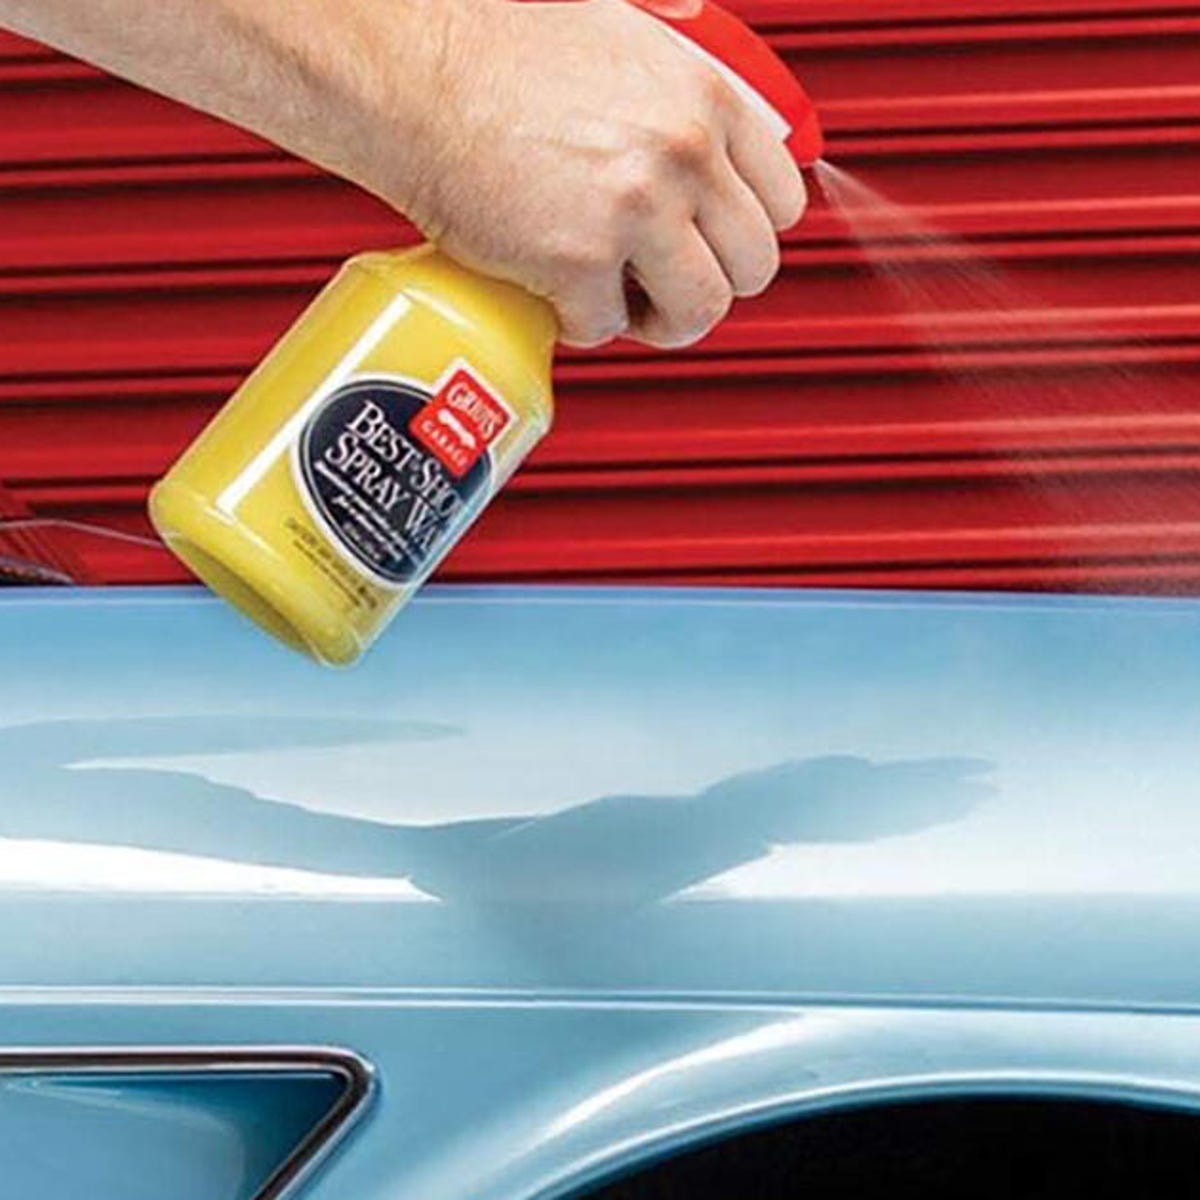 Nu Finish Car Polish: the polish that isn't, and better alternatives!